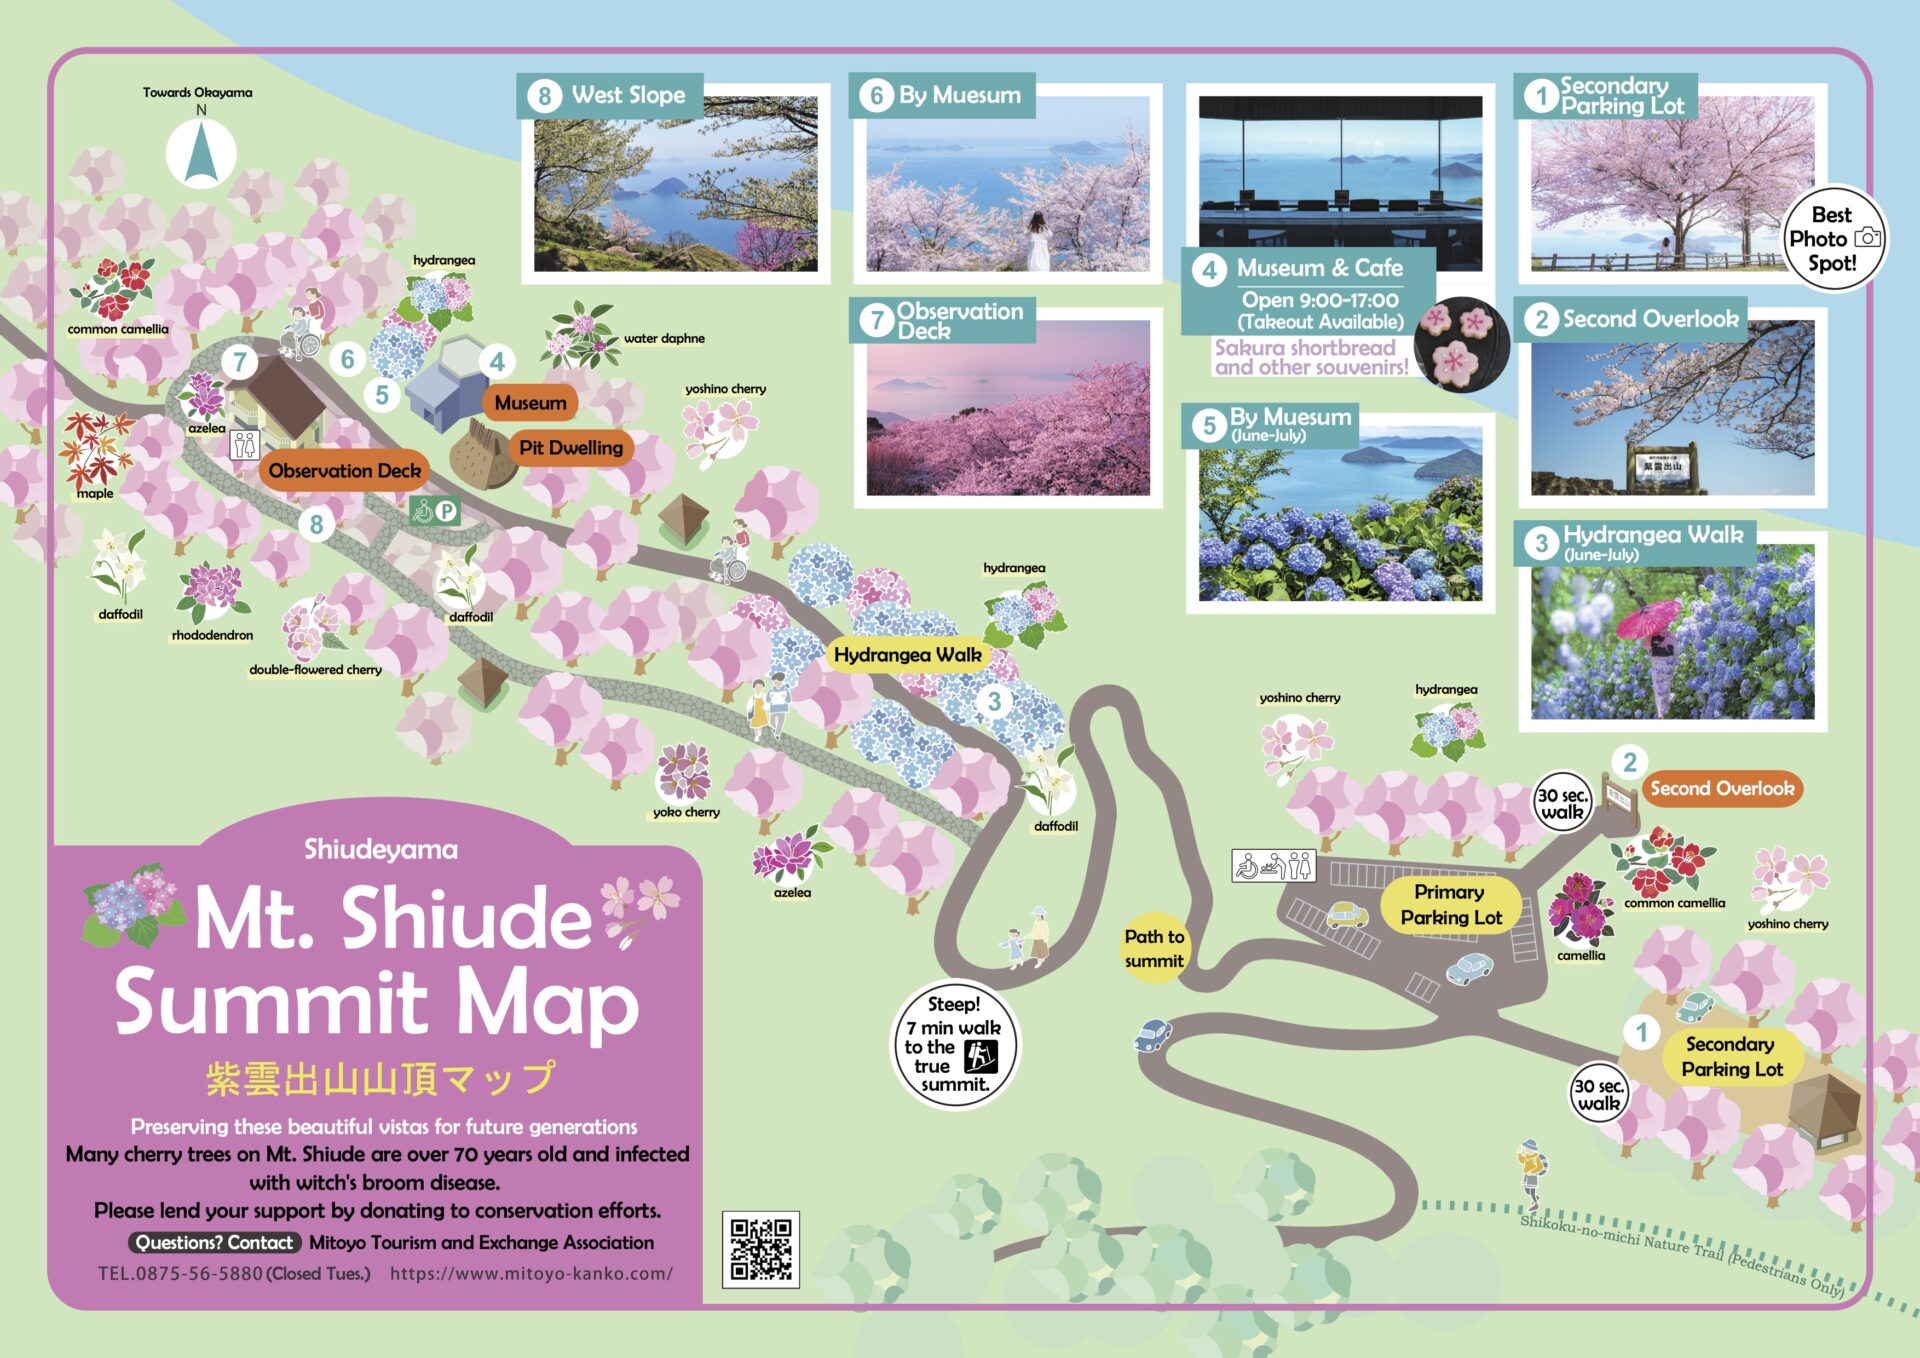 Mt. Shiude Summit Map